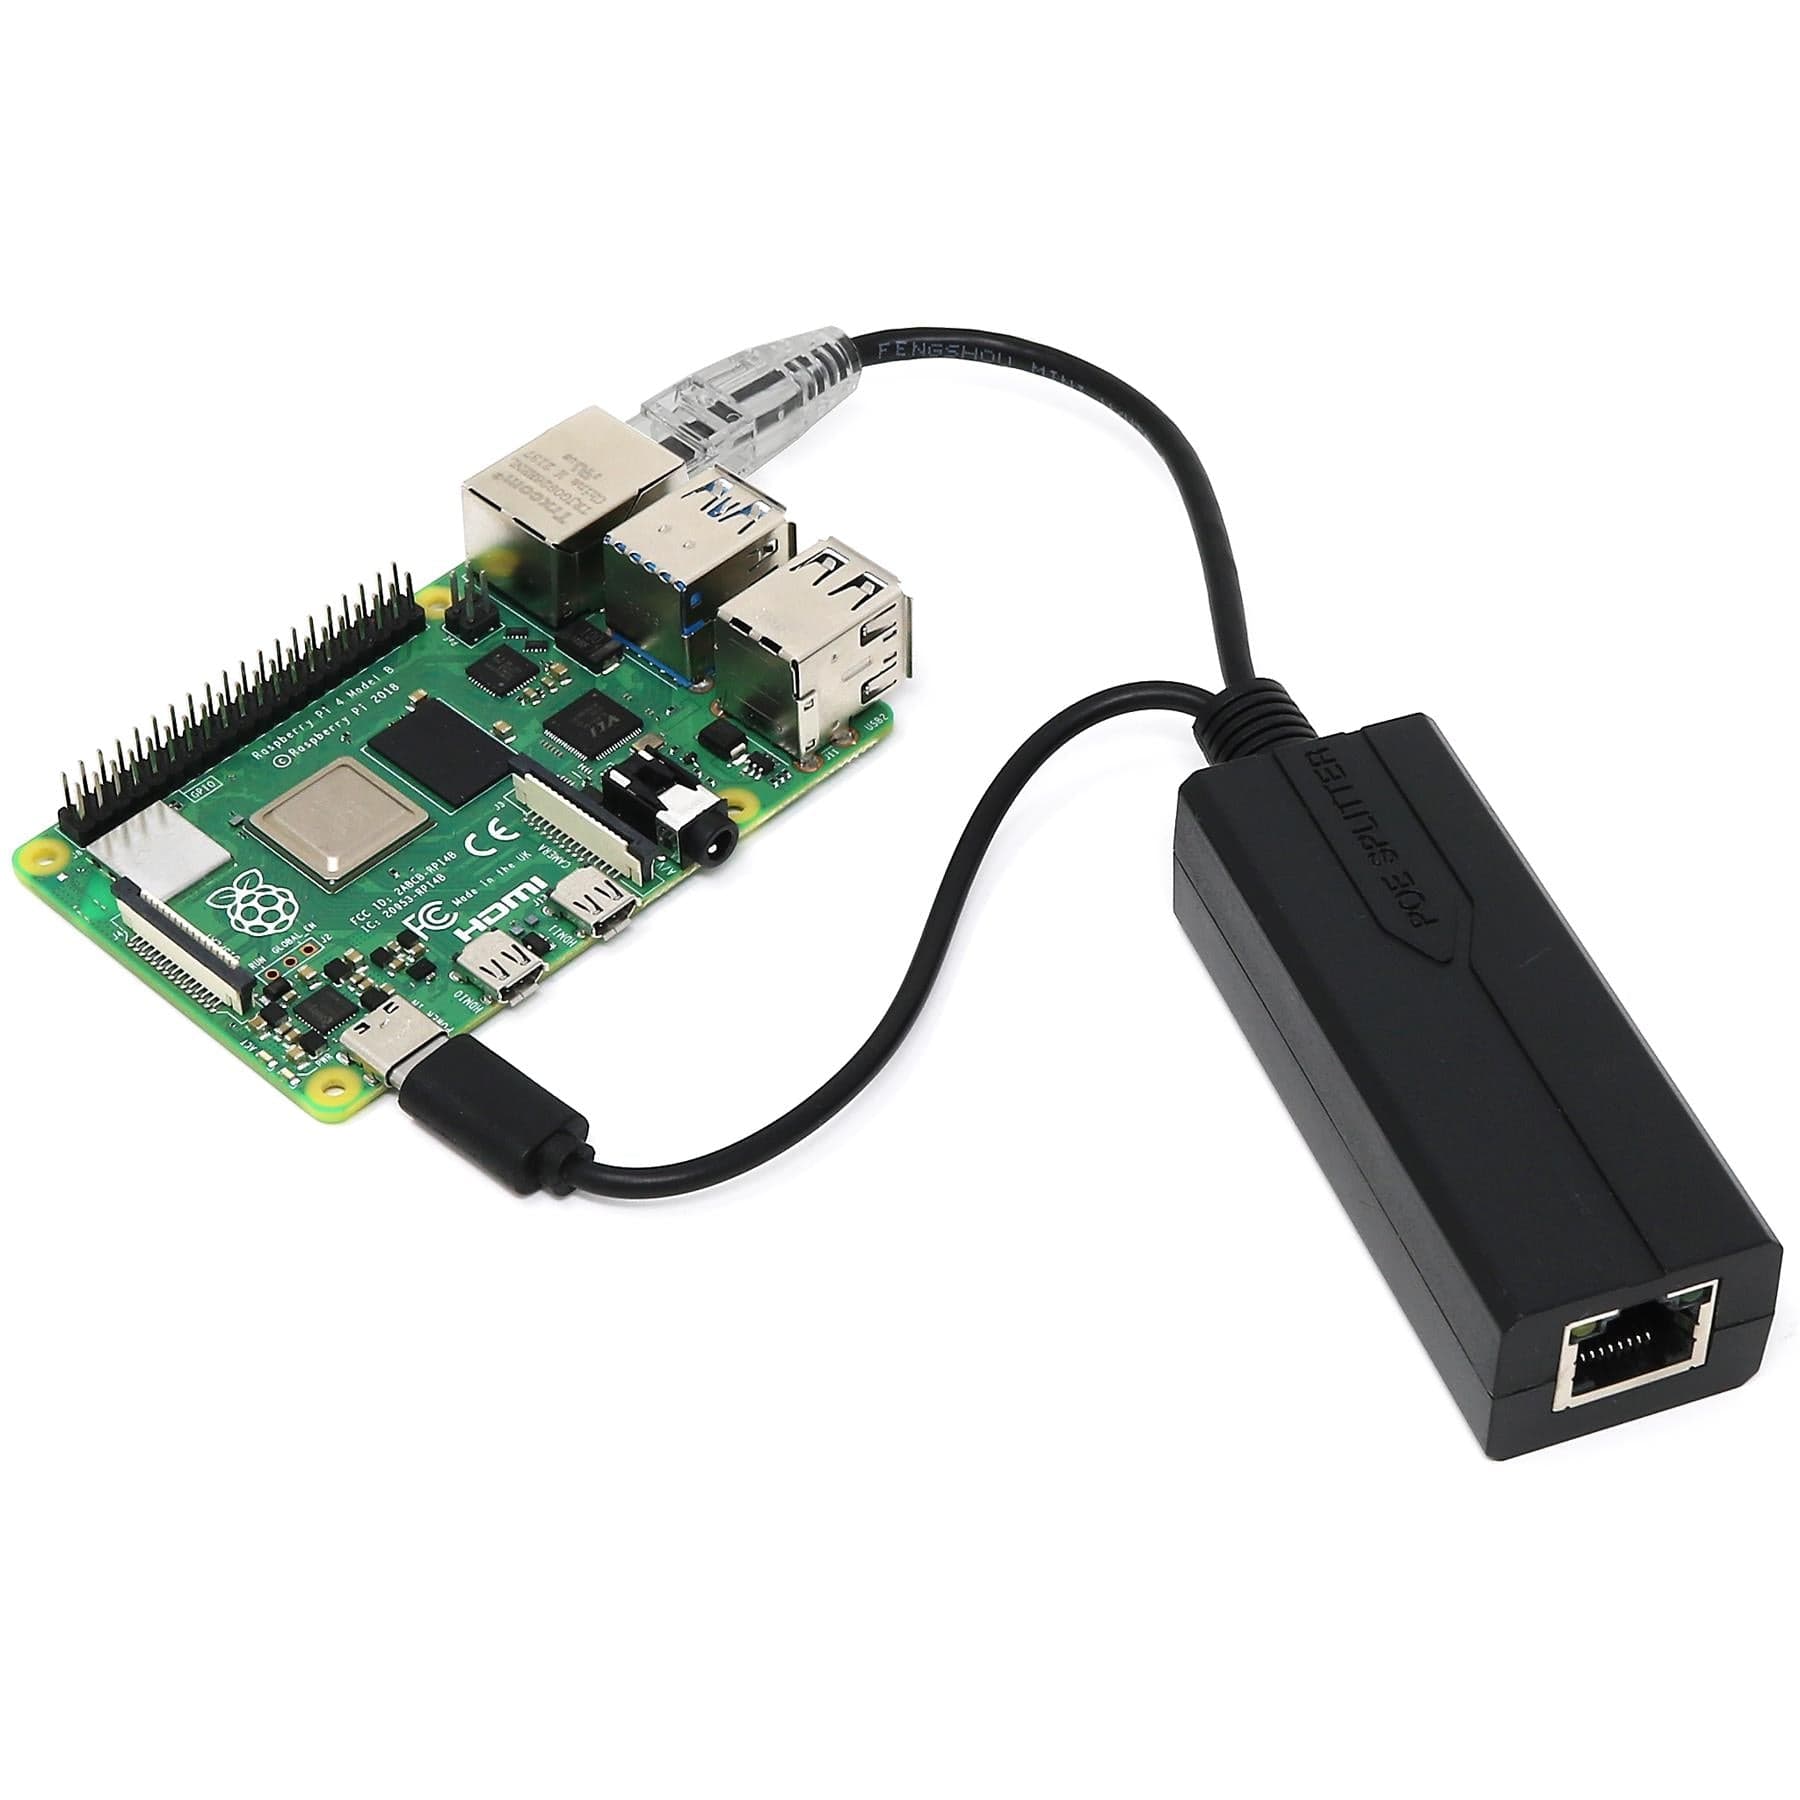 USB-C Gigabit PoE Splitter (5V 2.4A) - The Pi Hut